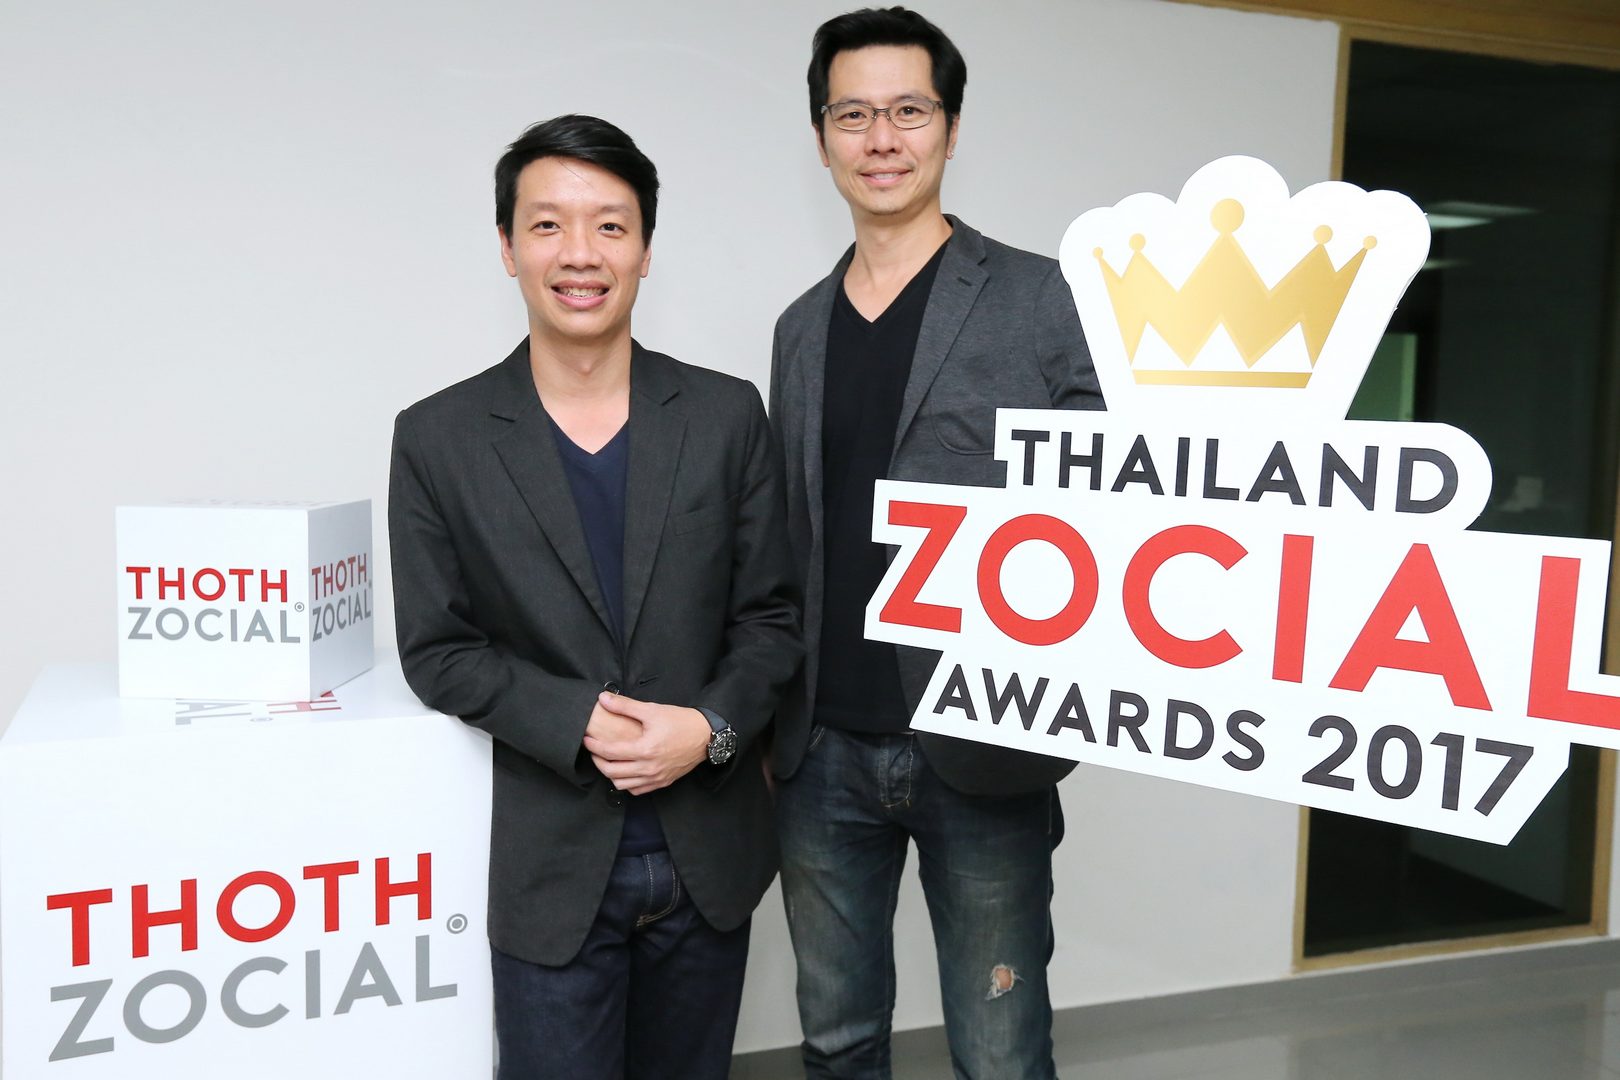 Thoth Zocial ชวนร่วมงานประกาศรางวัล Thailand Zocial Awards 2017